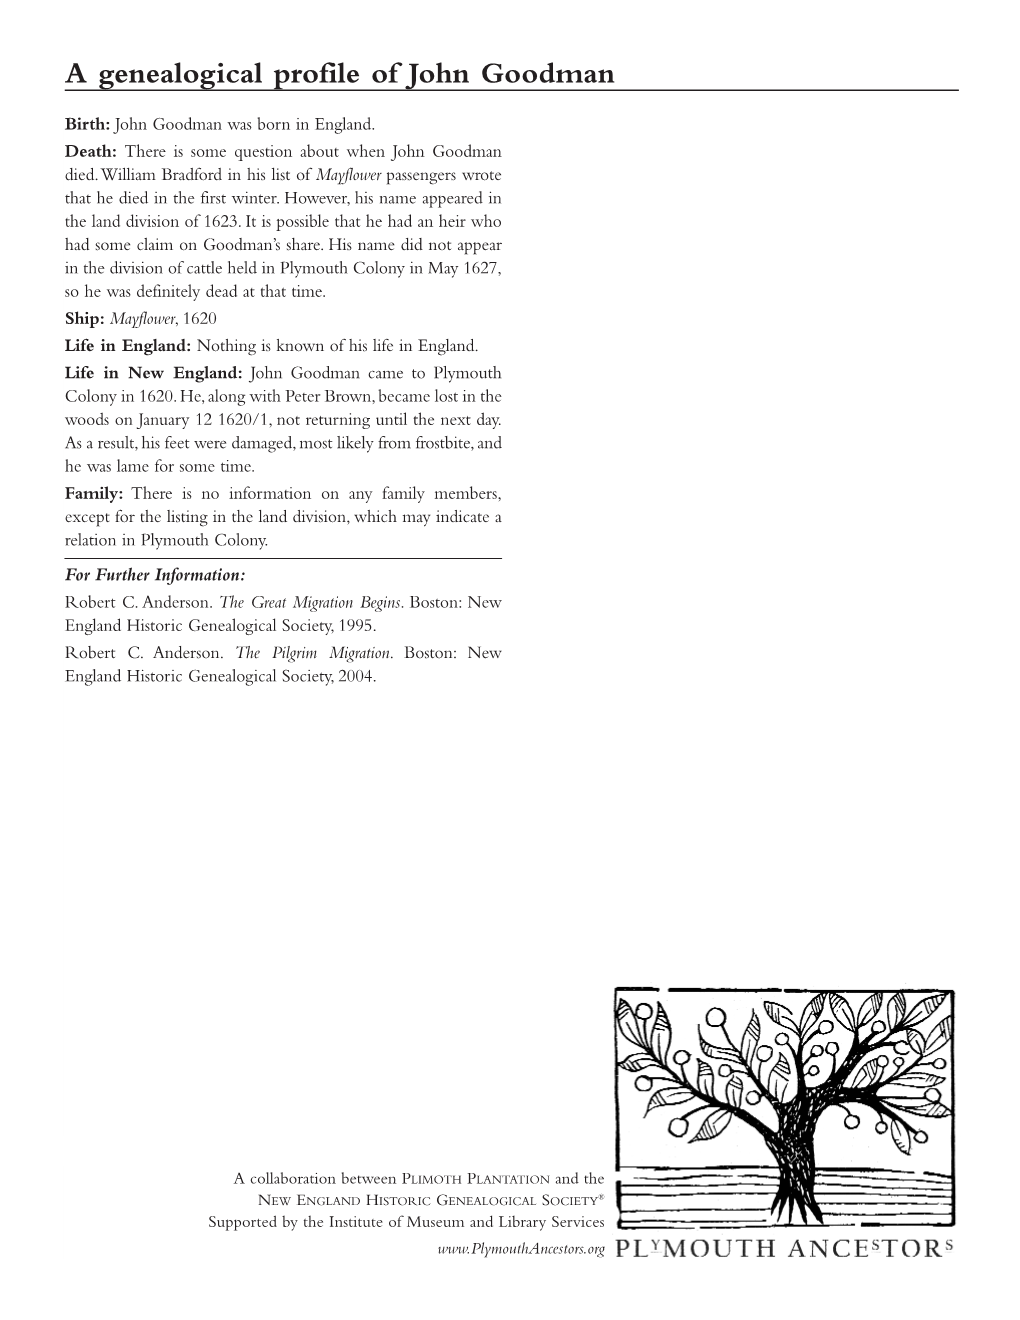 A Genealogical Profile of John Goodman